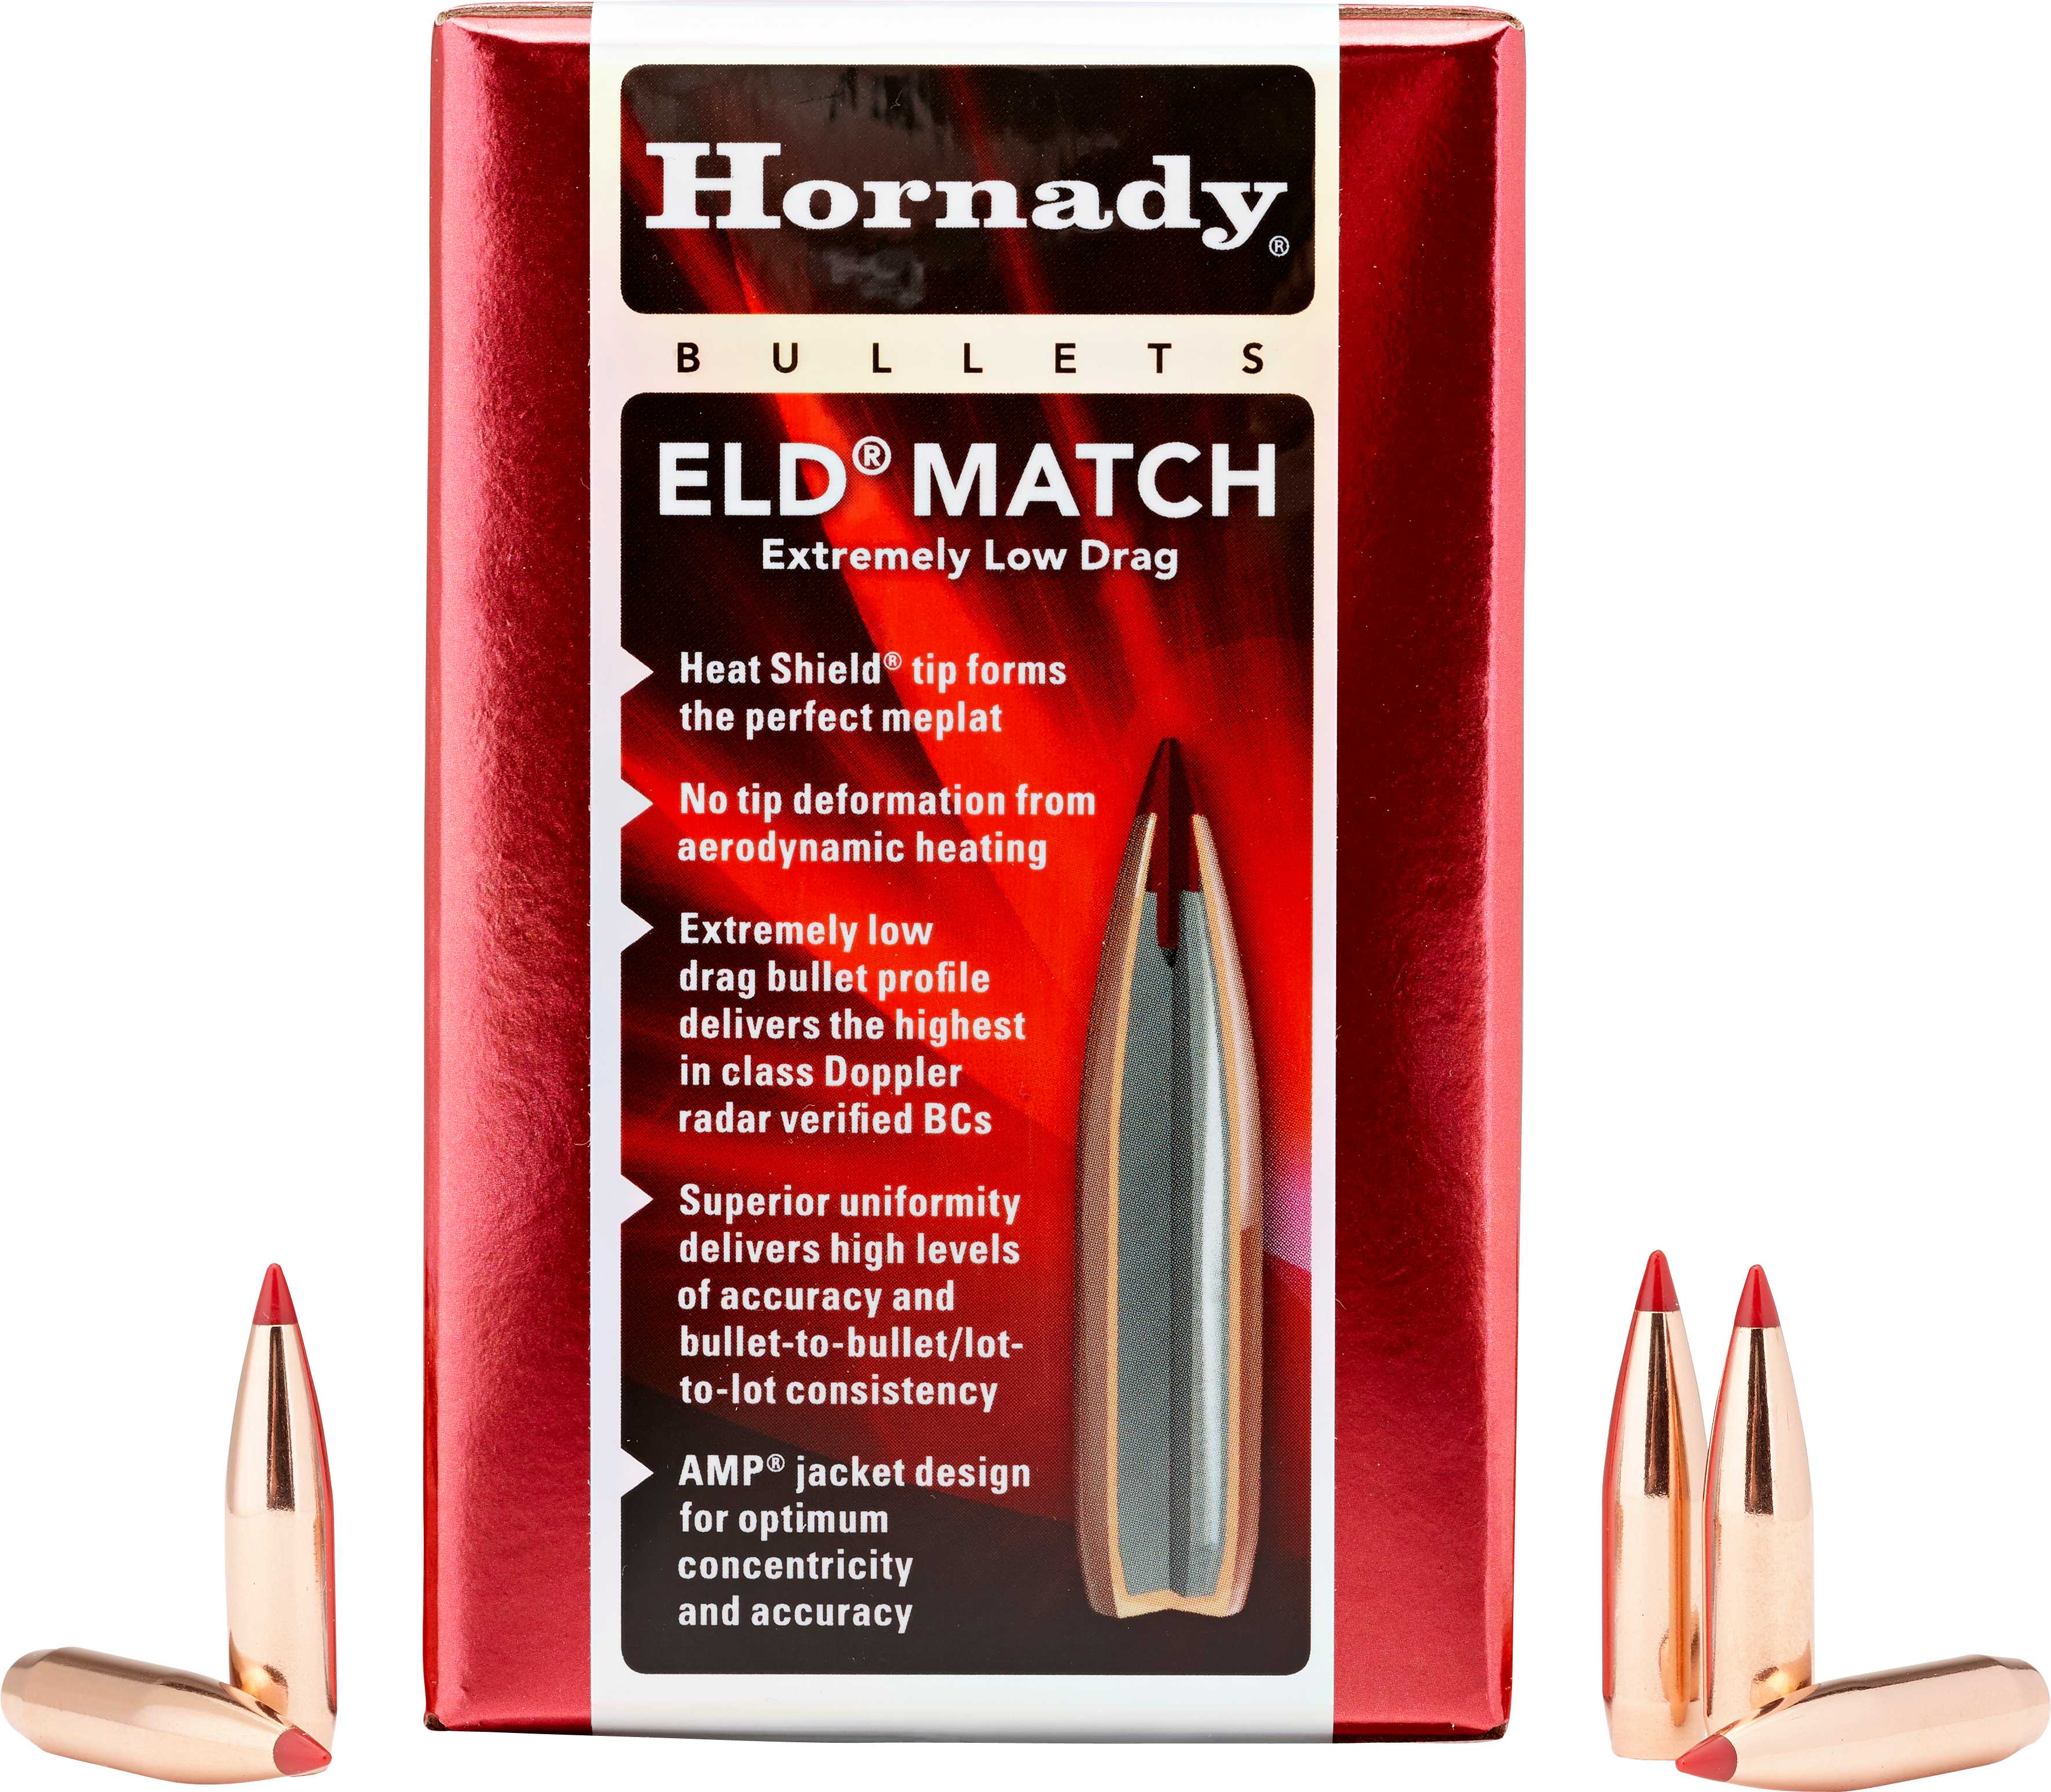 Hornady 7mm Bullets 162 Grains, Boat Tail, ELD Match, Per 100 Md: 28403